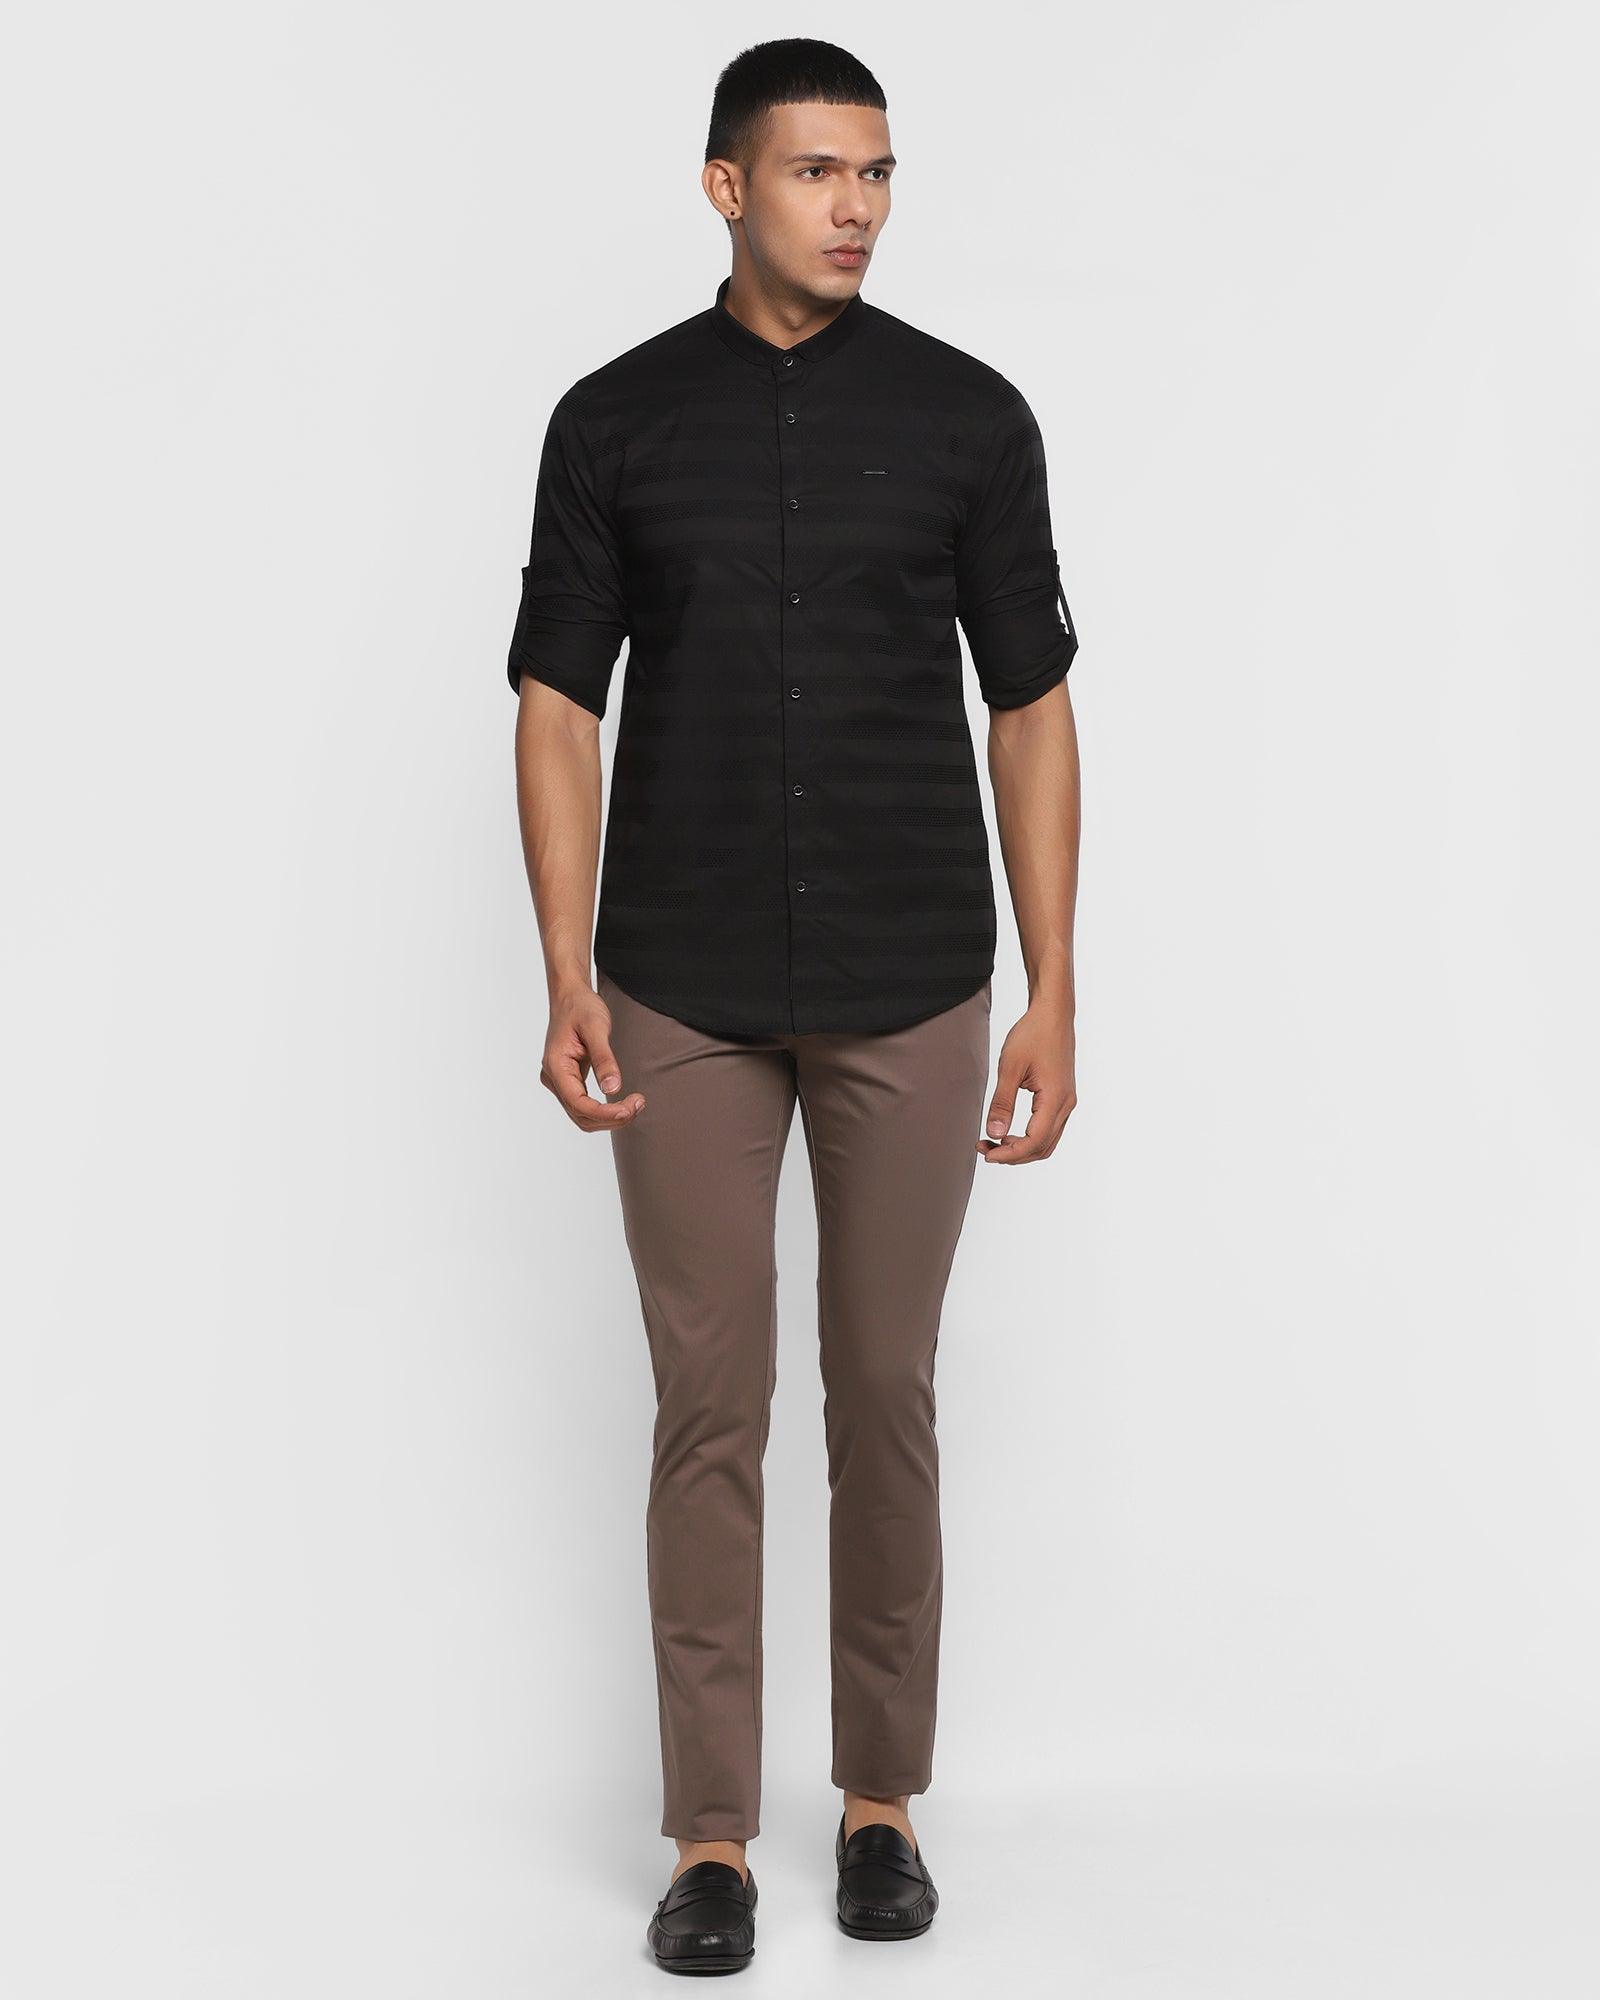 Casual Black Striped Shirt - Gaz